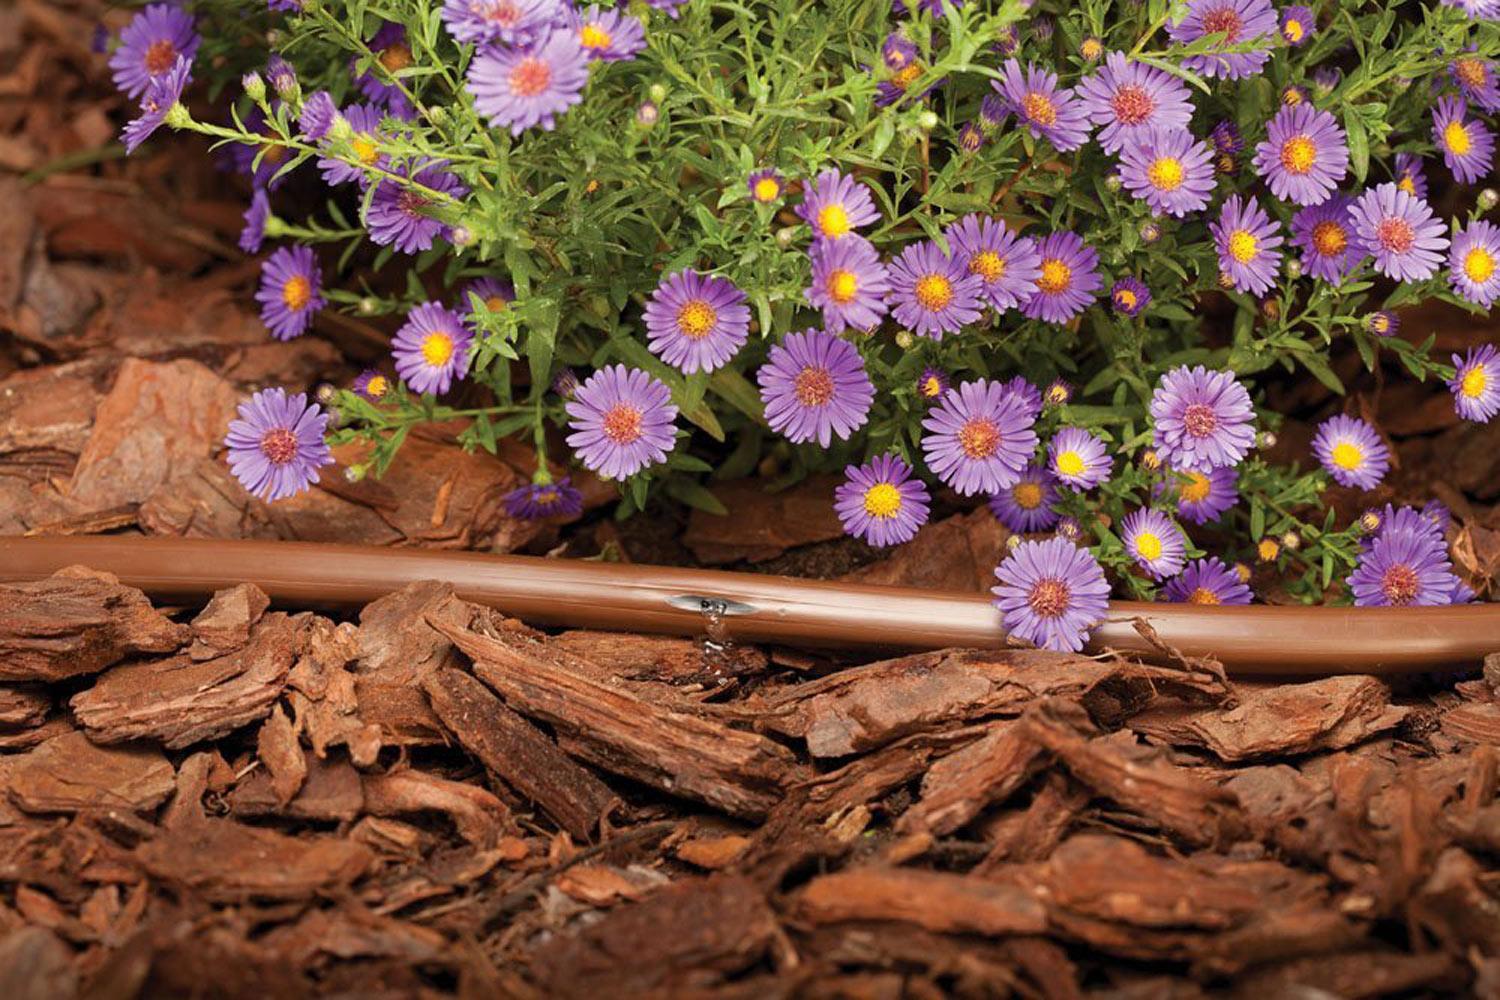 camouflaged drip irrigation line in a garden of purple flowers